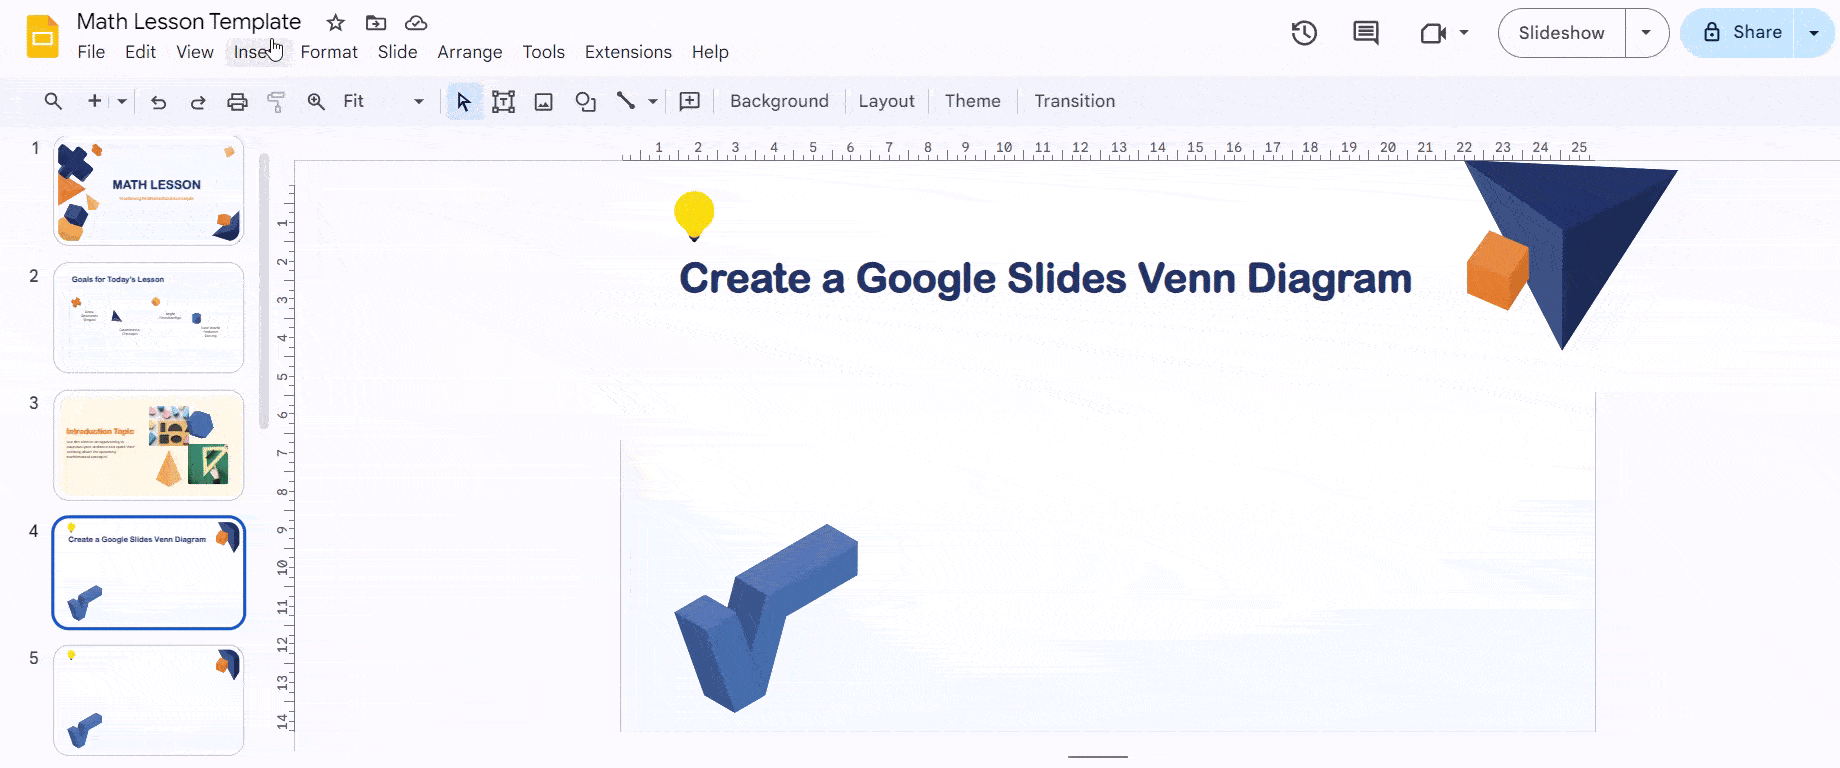 Method 2 Create a Google Slides Venn Diagram using Diagrams